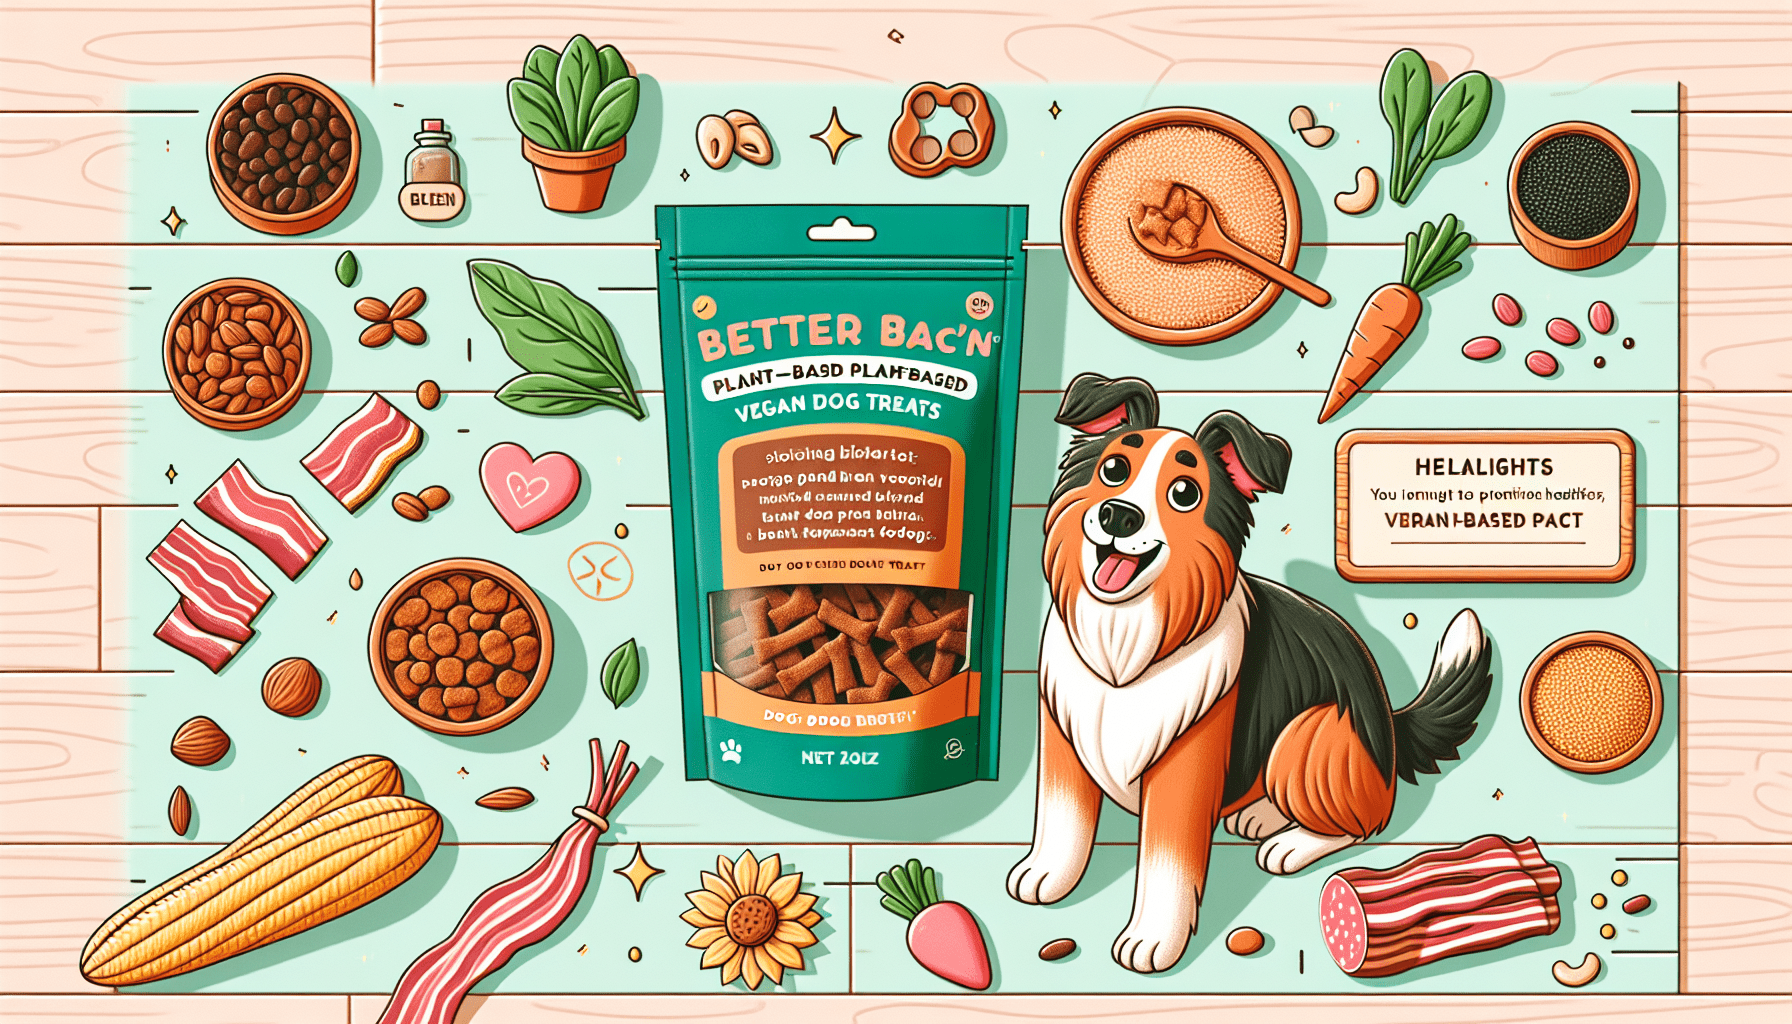 Better Bac’n Plant-Based Vegan Dog Treats – 6oz Review